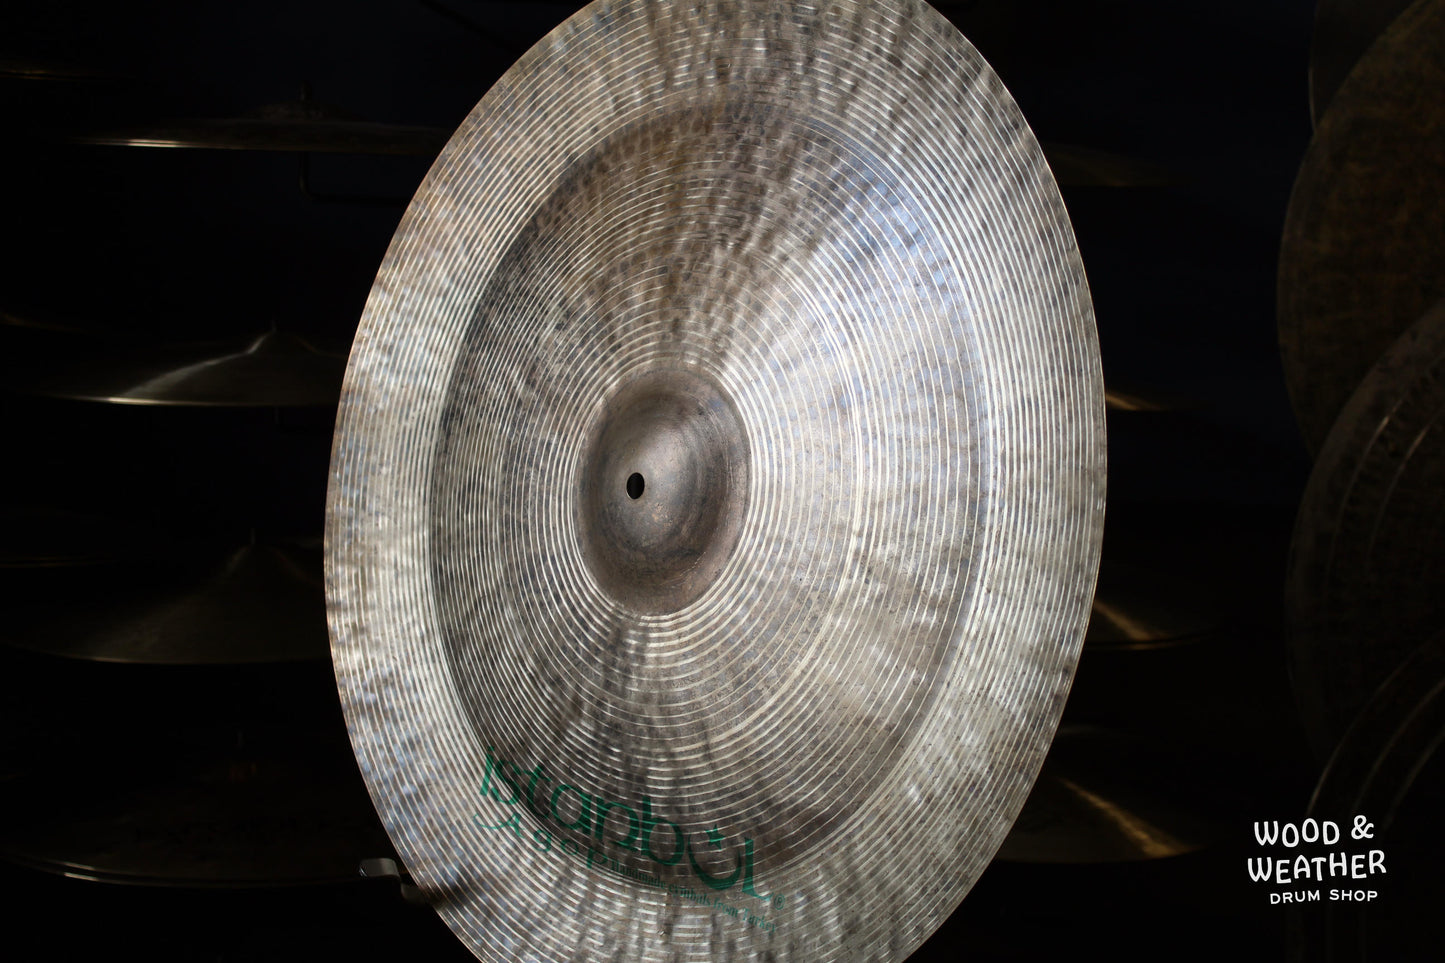 Istanbul Agop 22" Signature China Cymbal 1680g